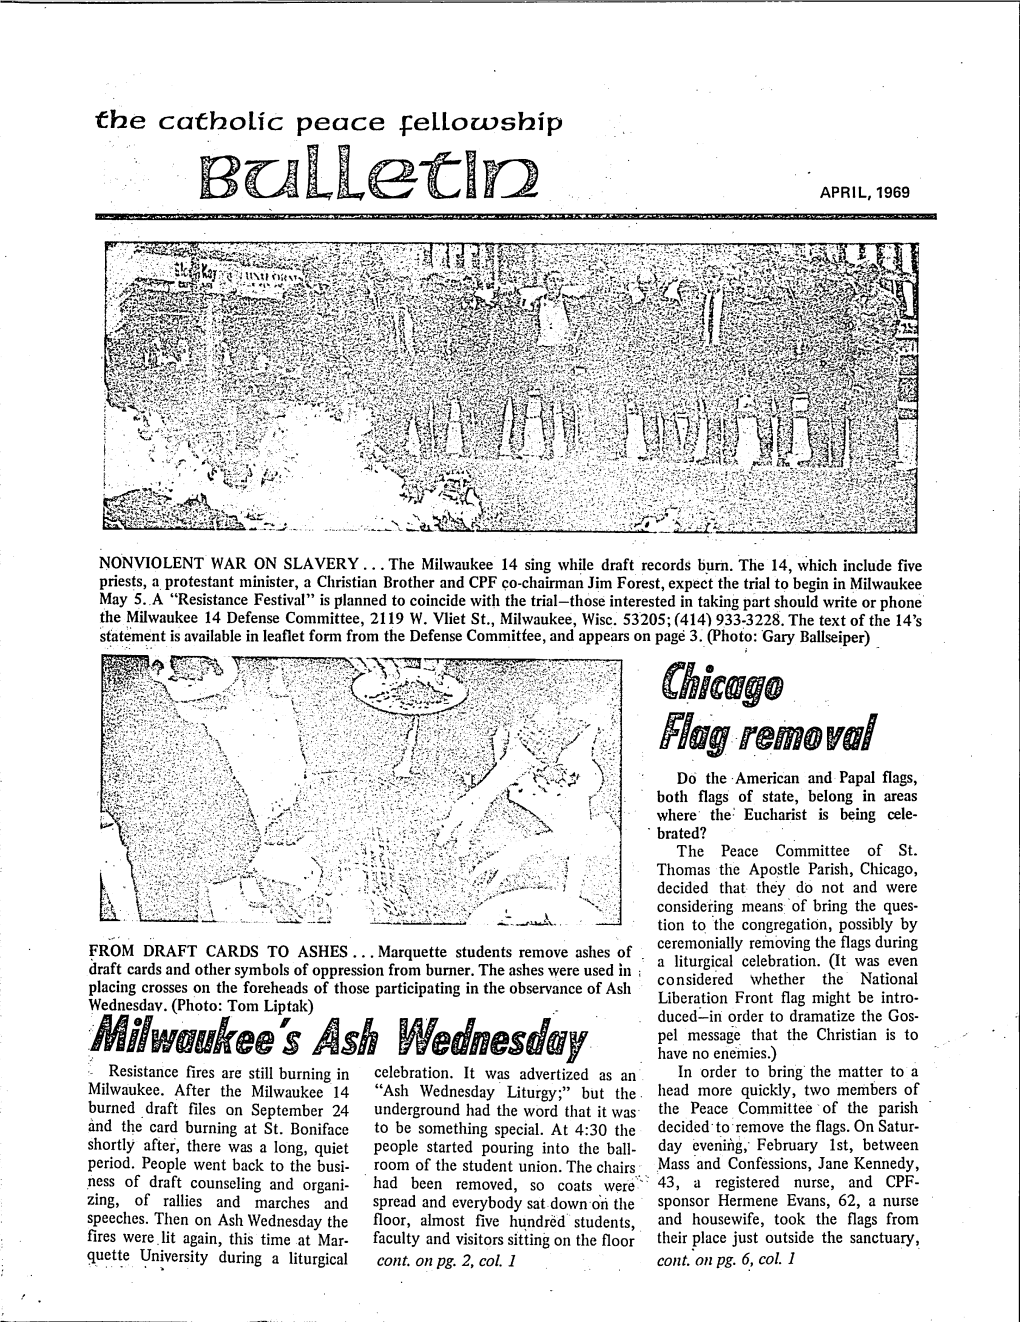 Catholic Peace Fellowship Bulletin, April 1969